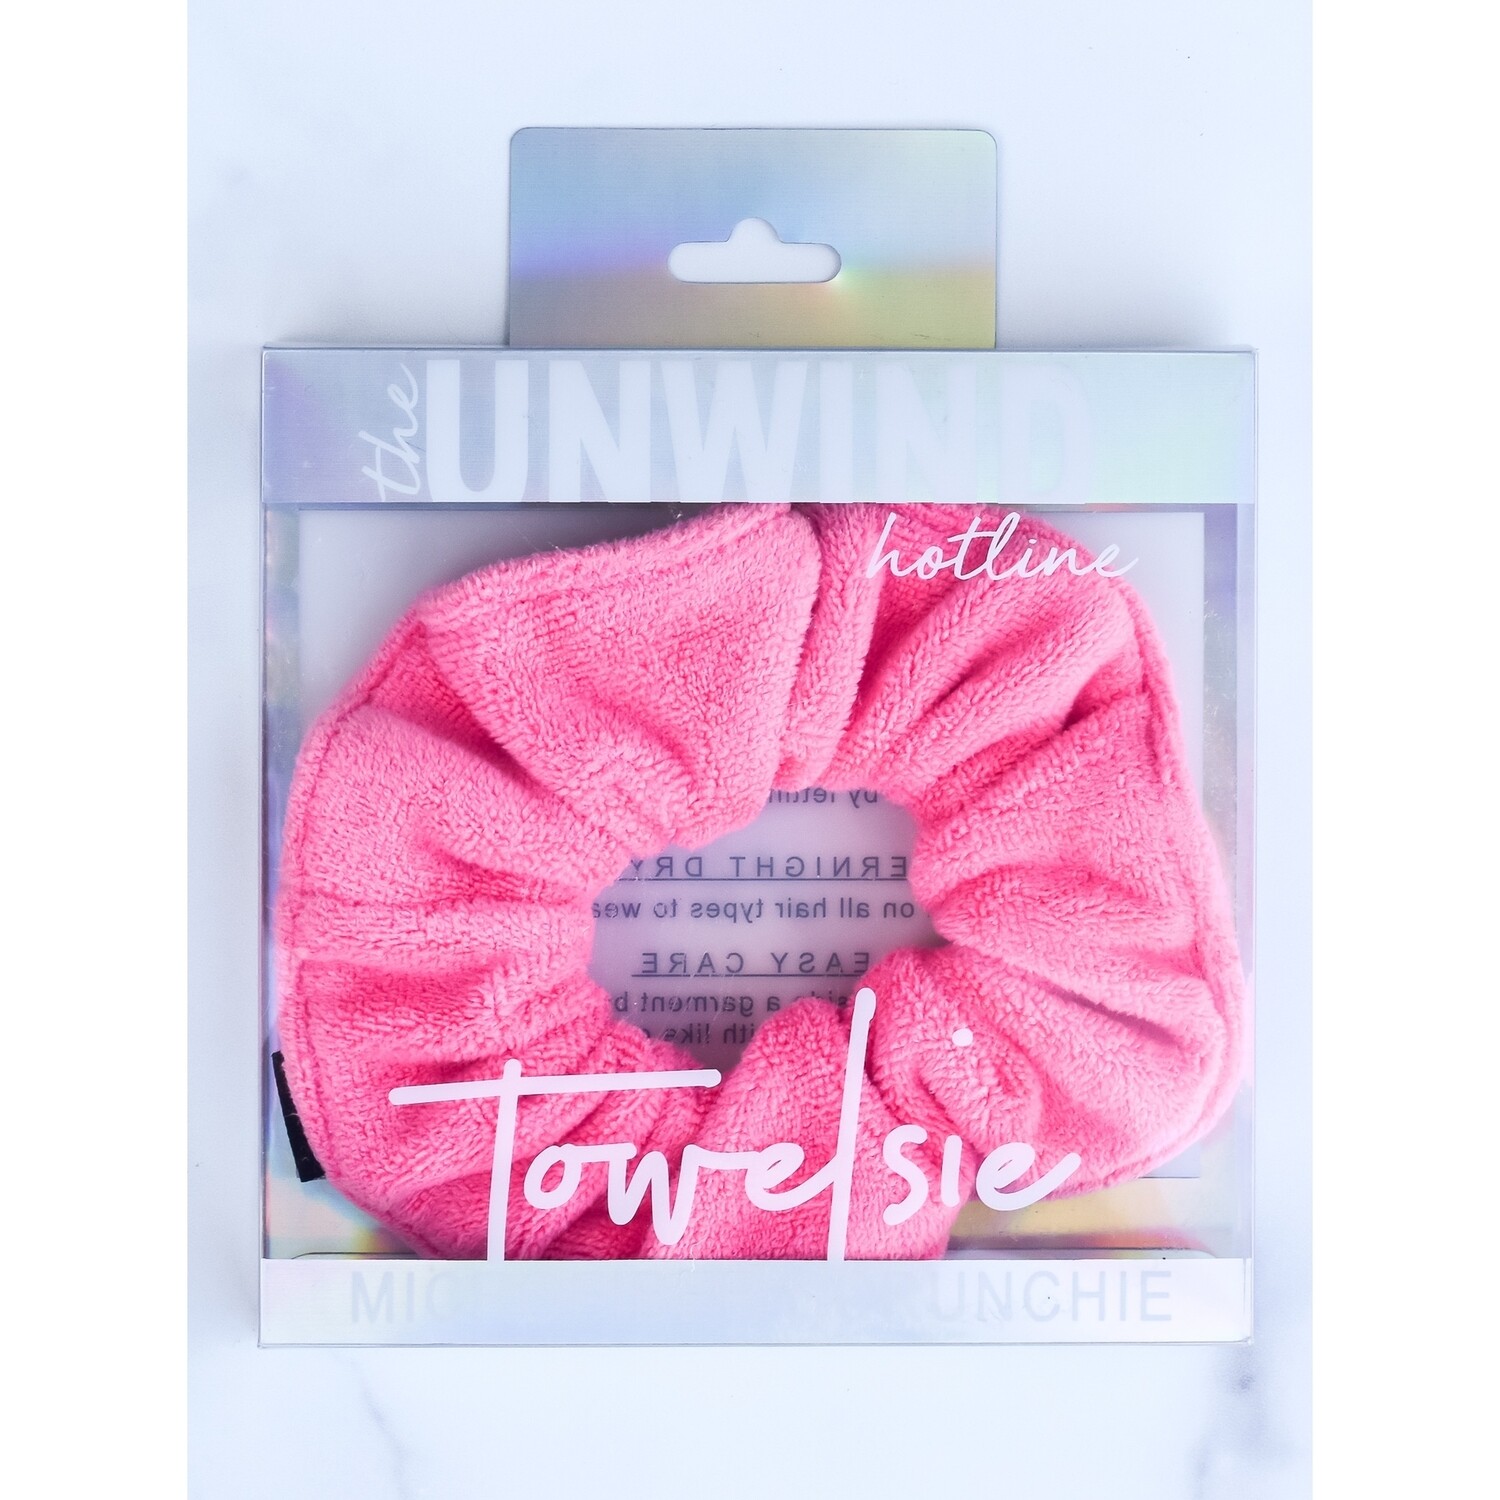 SH Towelsie Scrunchie Hot Pink